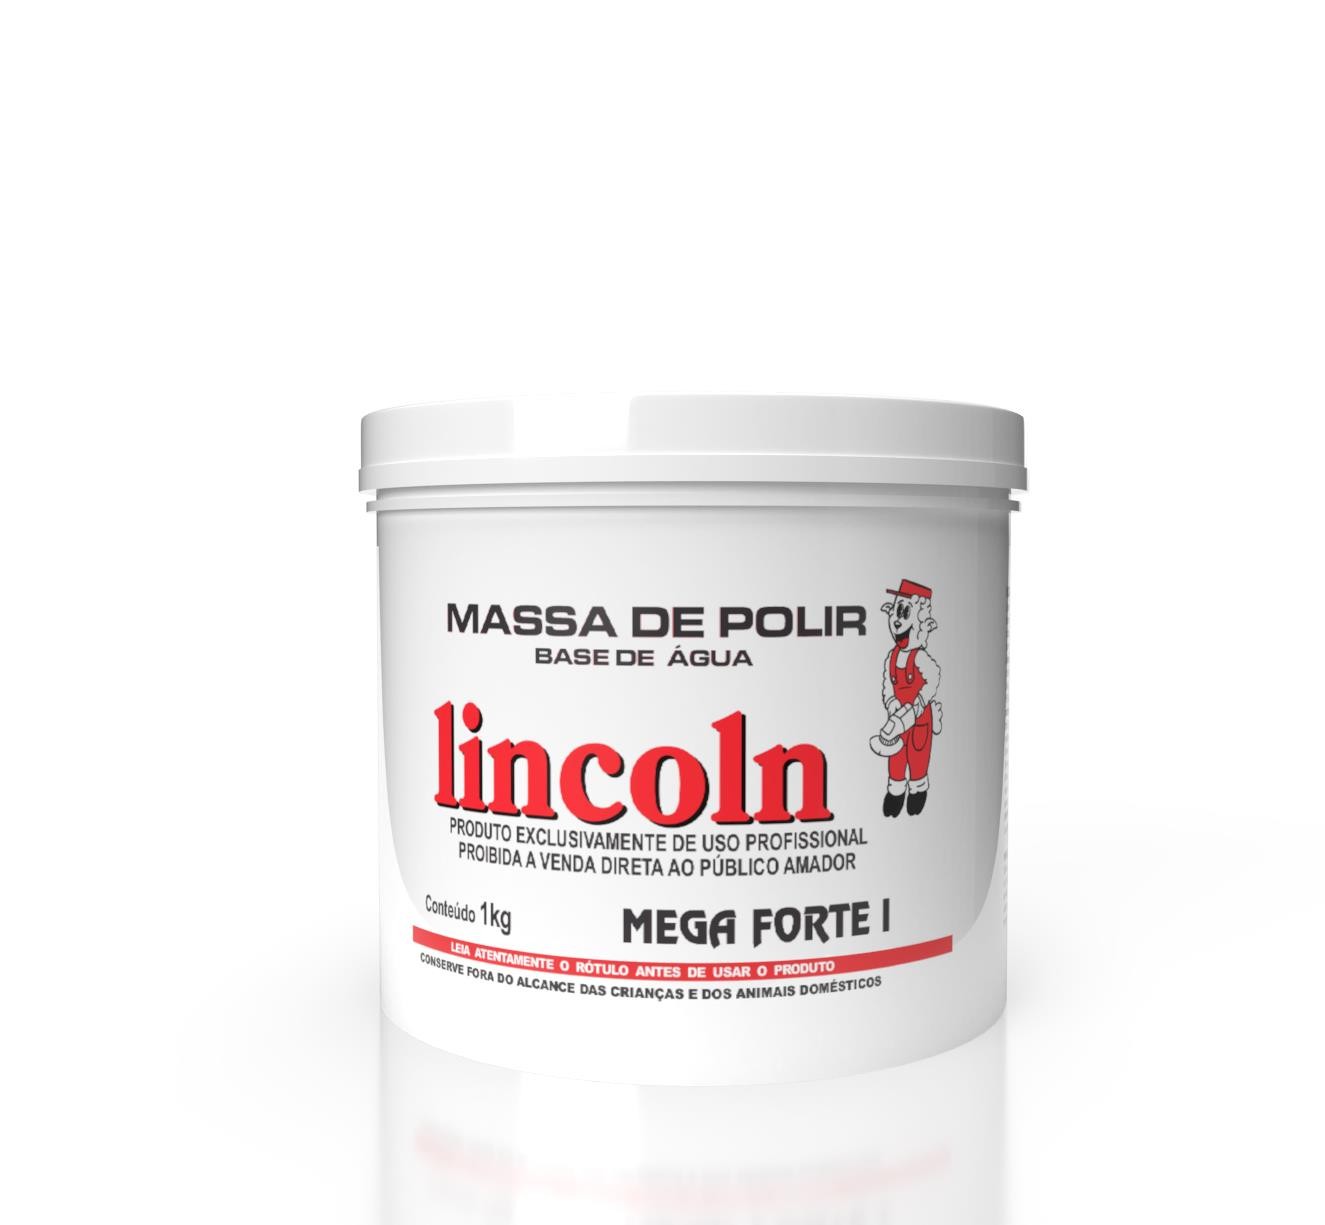 MEGA FORTE  N 1 MASSA PARA POLIR 1kg - LINCOLN